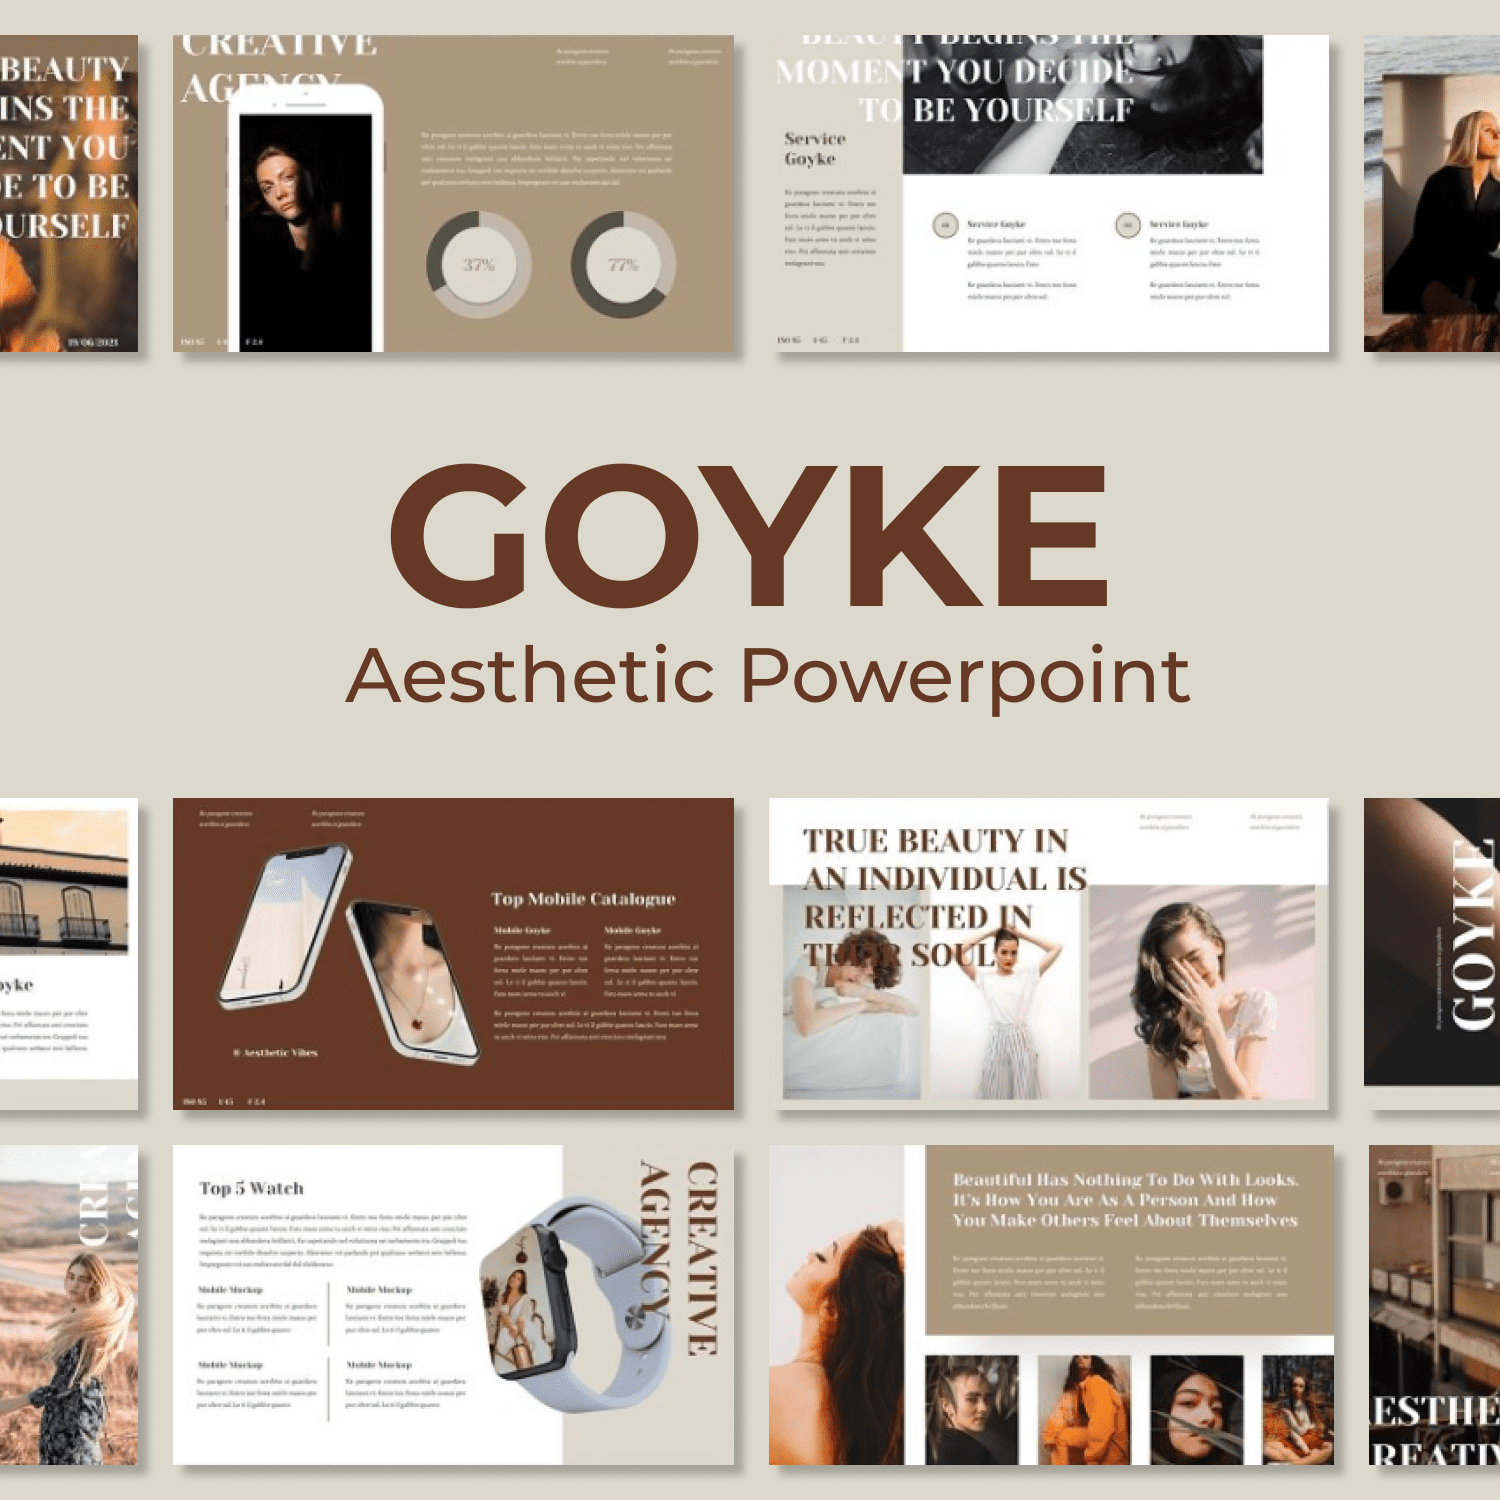 Goyke Aesthetic Powerpoint main cover.